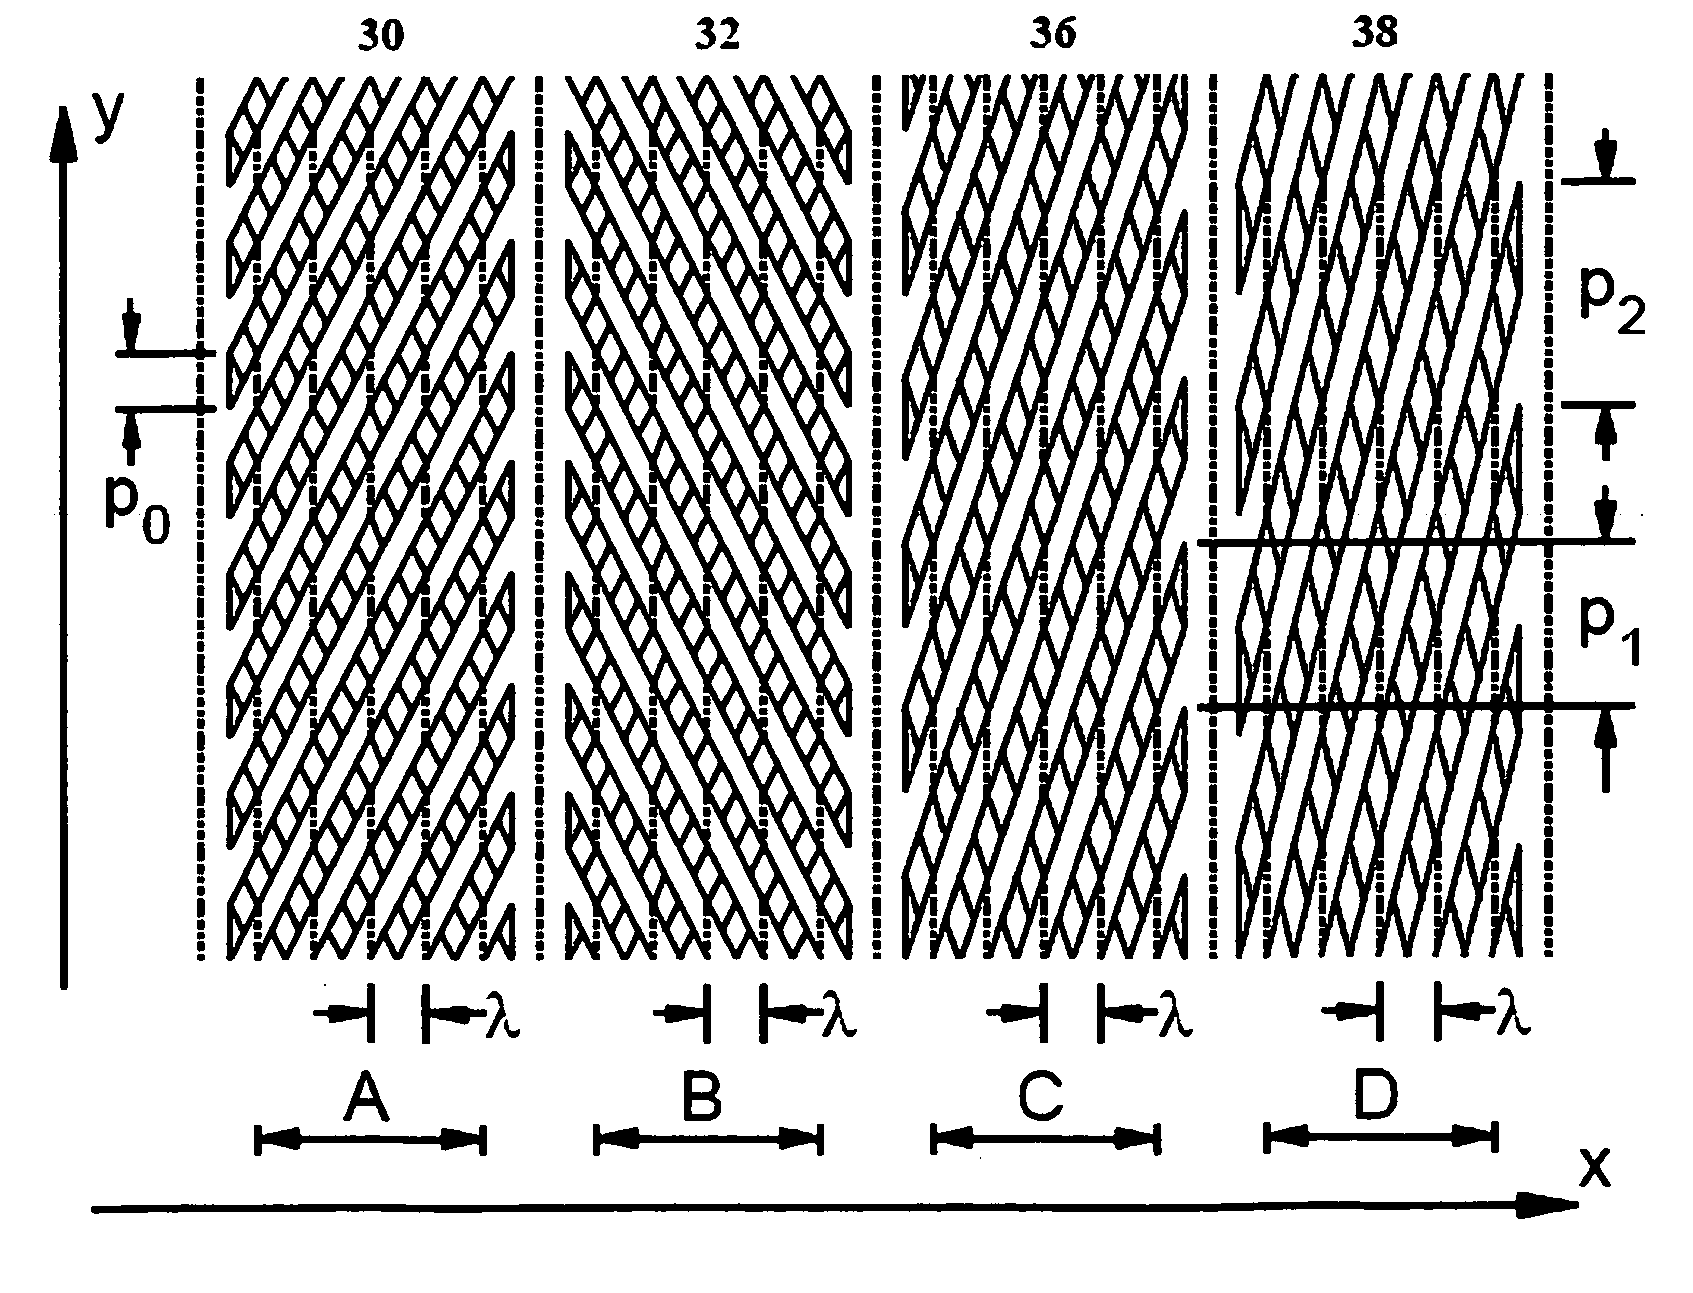 Compound phase encoding for printed servo patterns